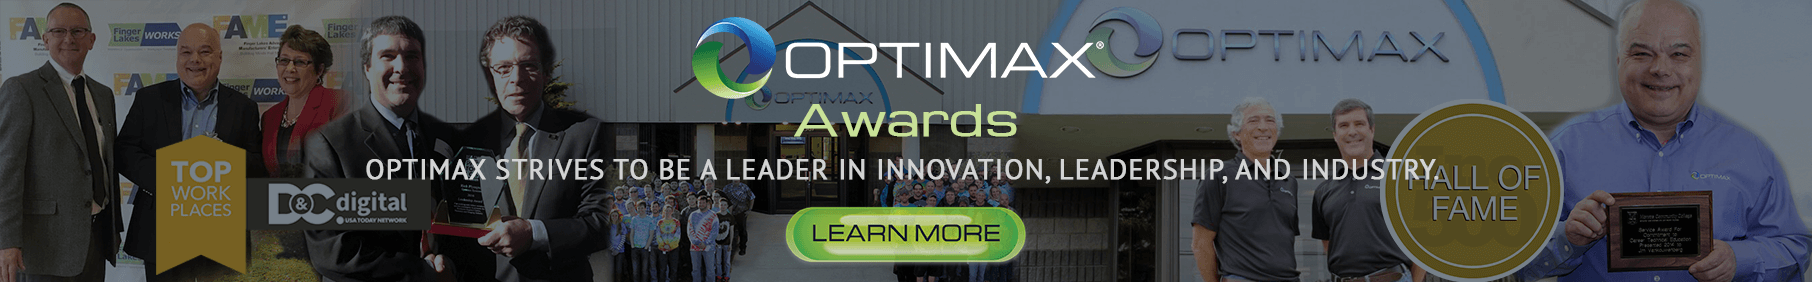 Optimax Awards